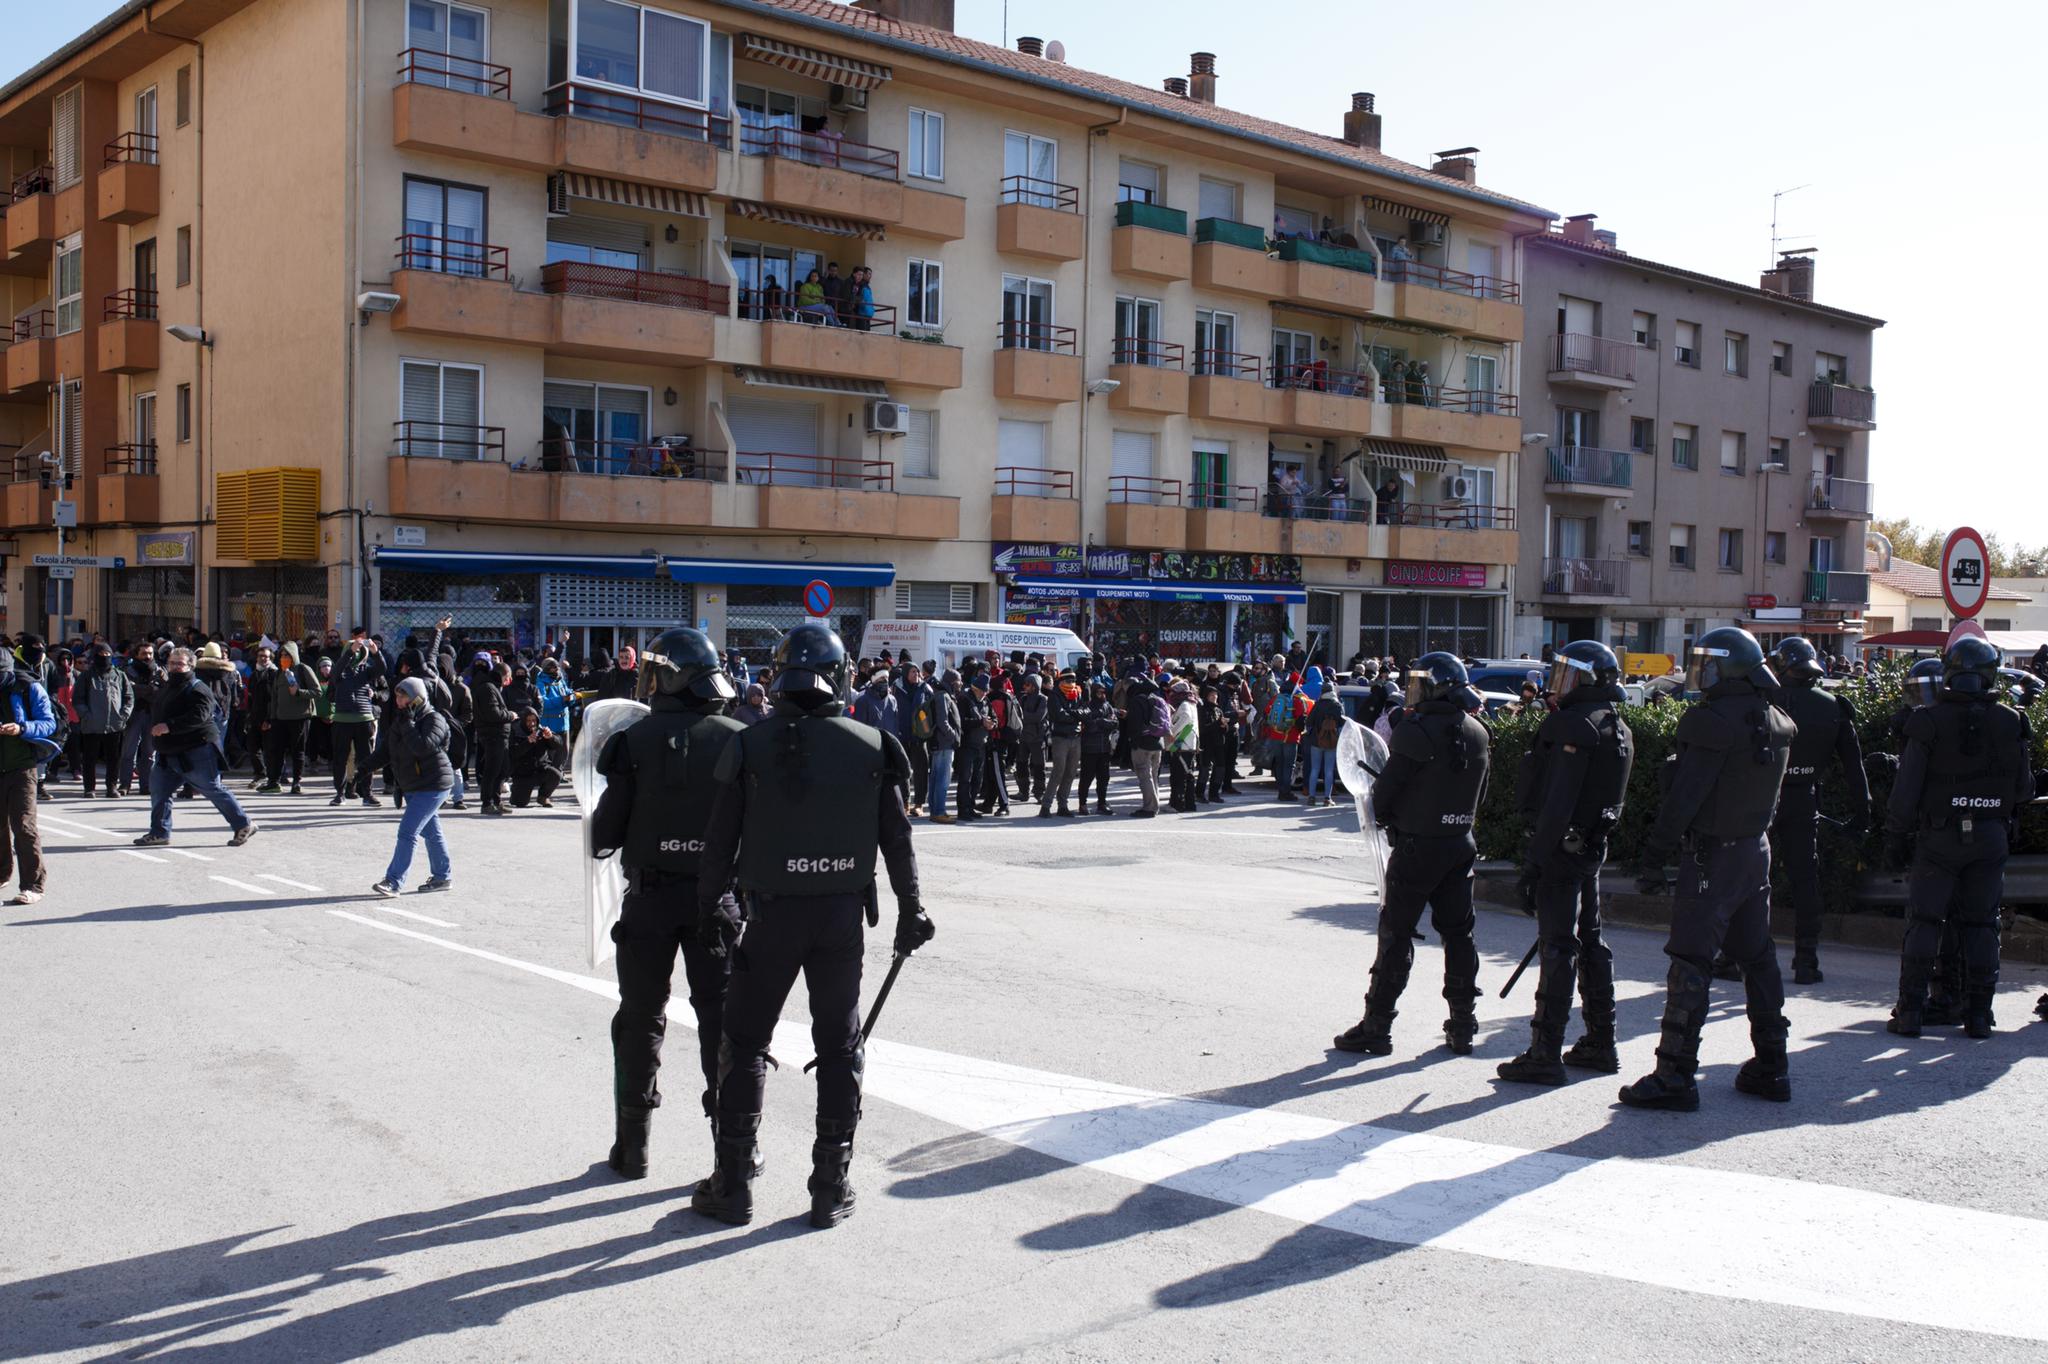 Guàrdies civils demanen als Reis que es declari Catalunya "zona conflictiva"